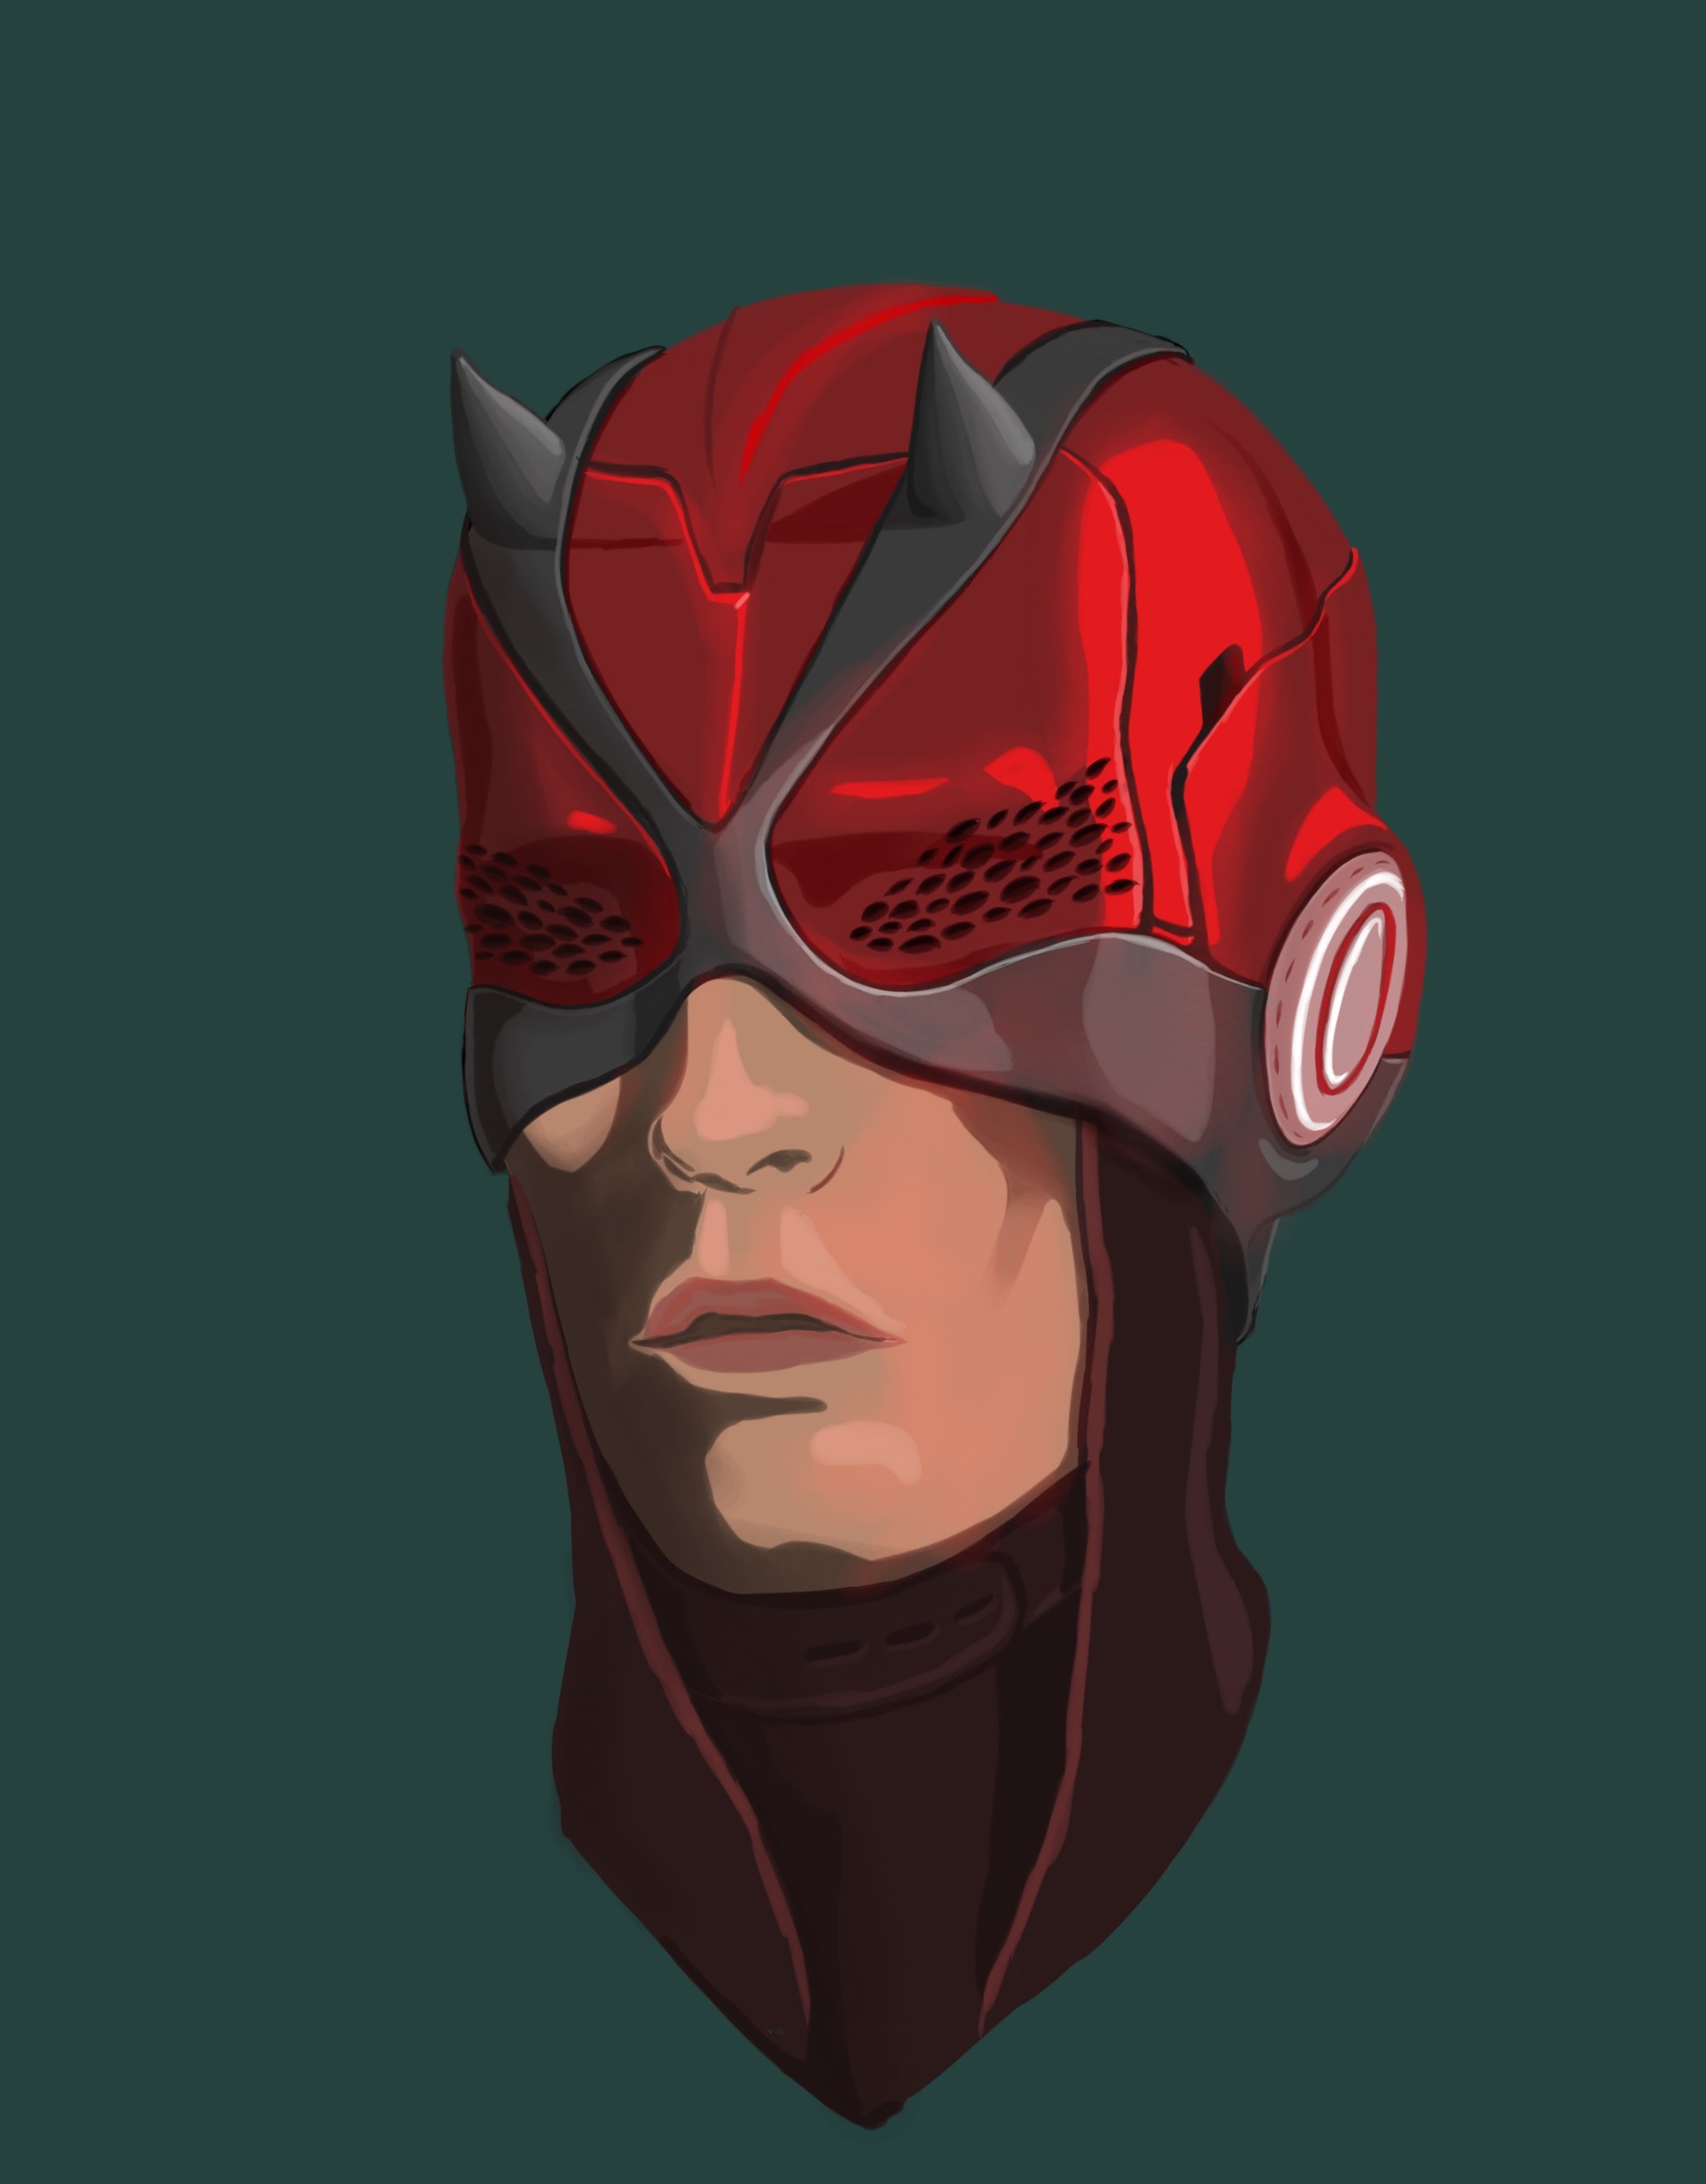 ArtStation - Marvel Superheroes Redesign